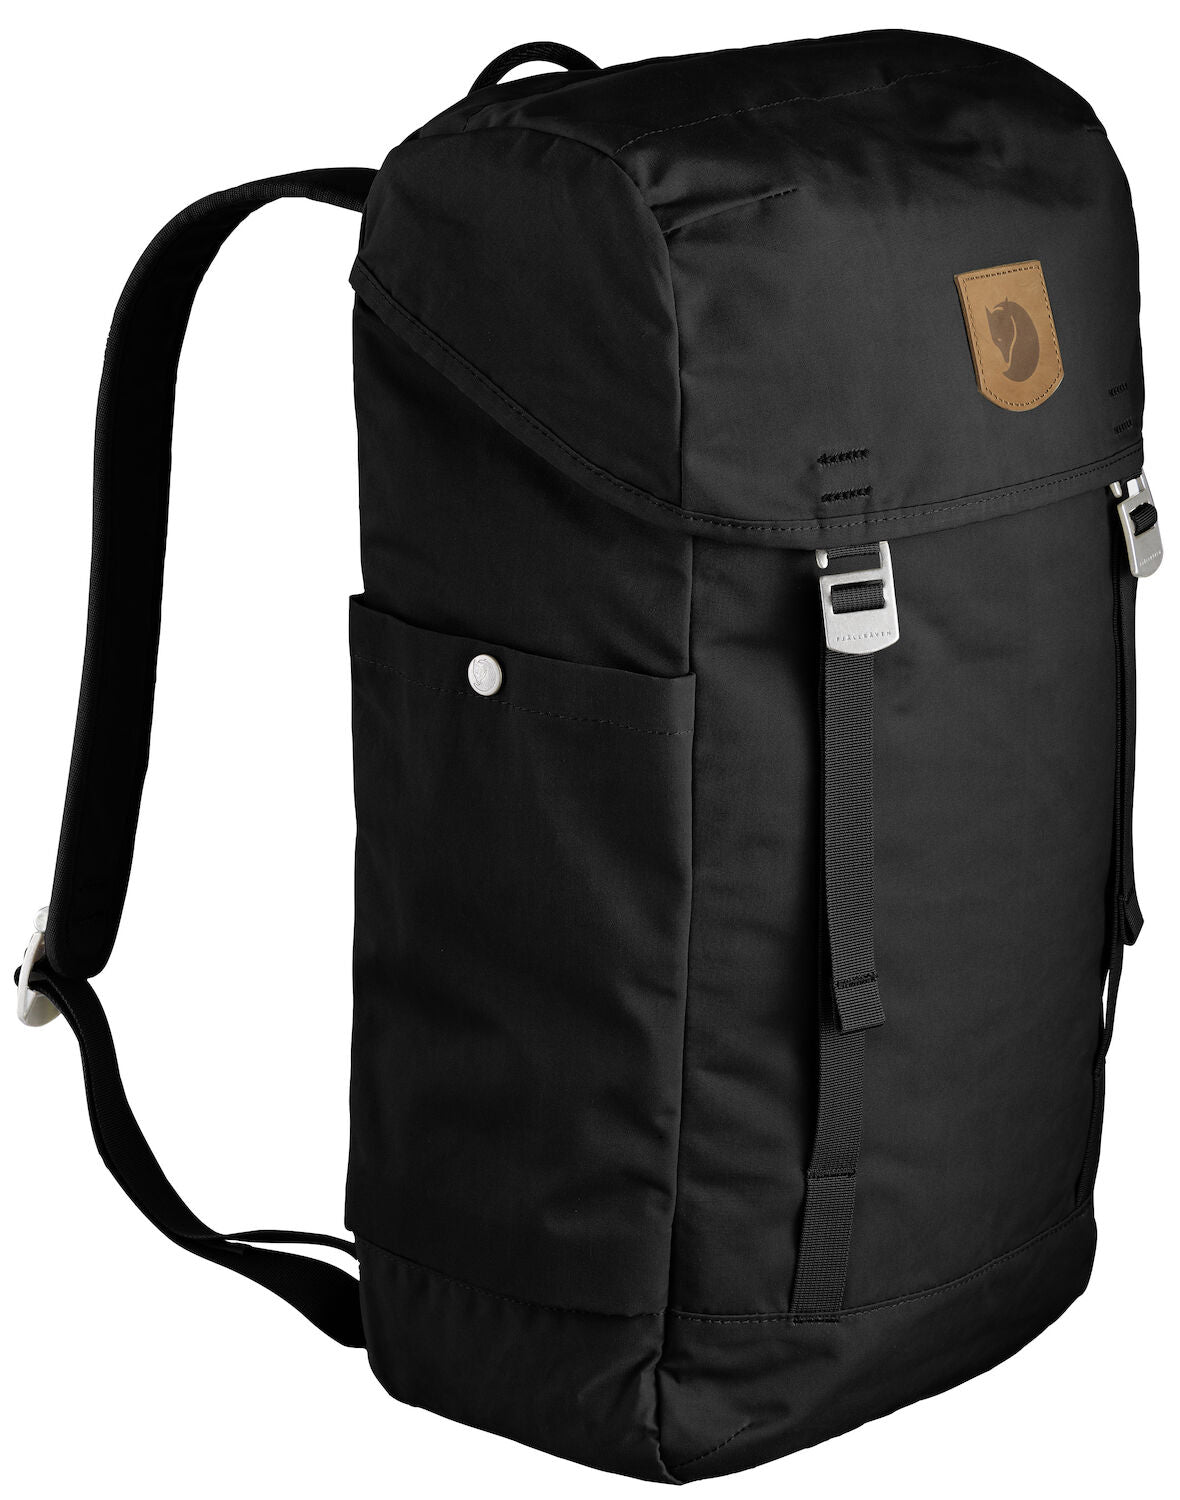 Black branded backpack for jungle safari